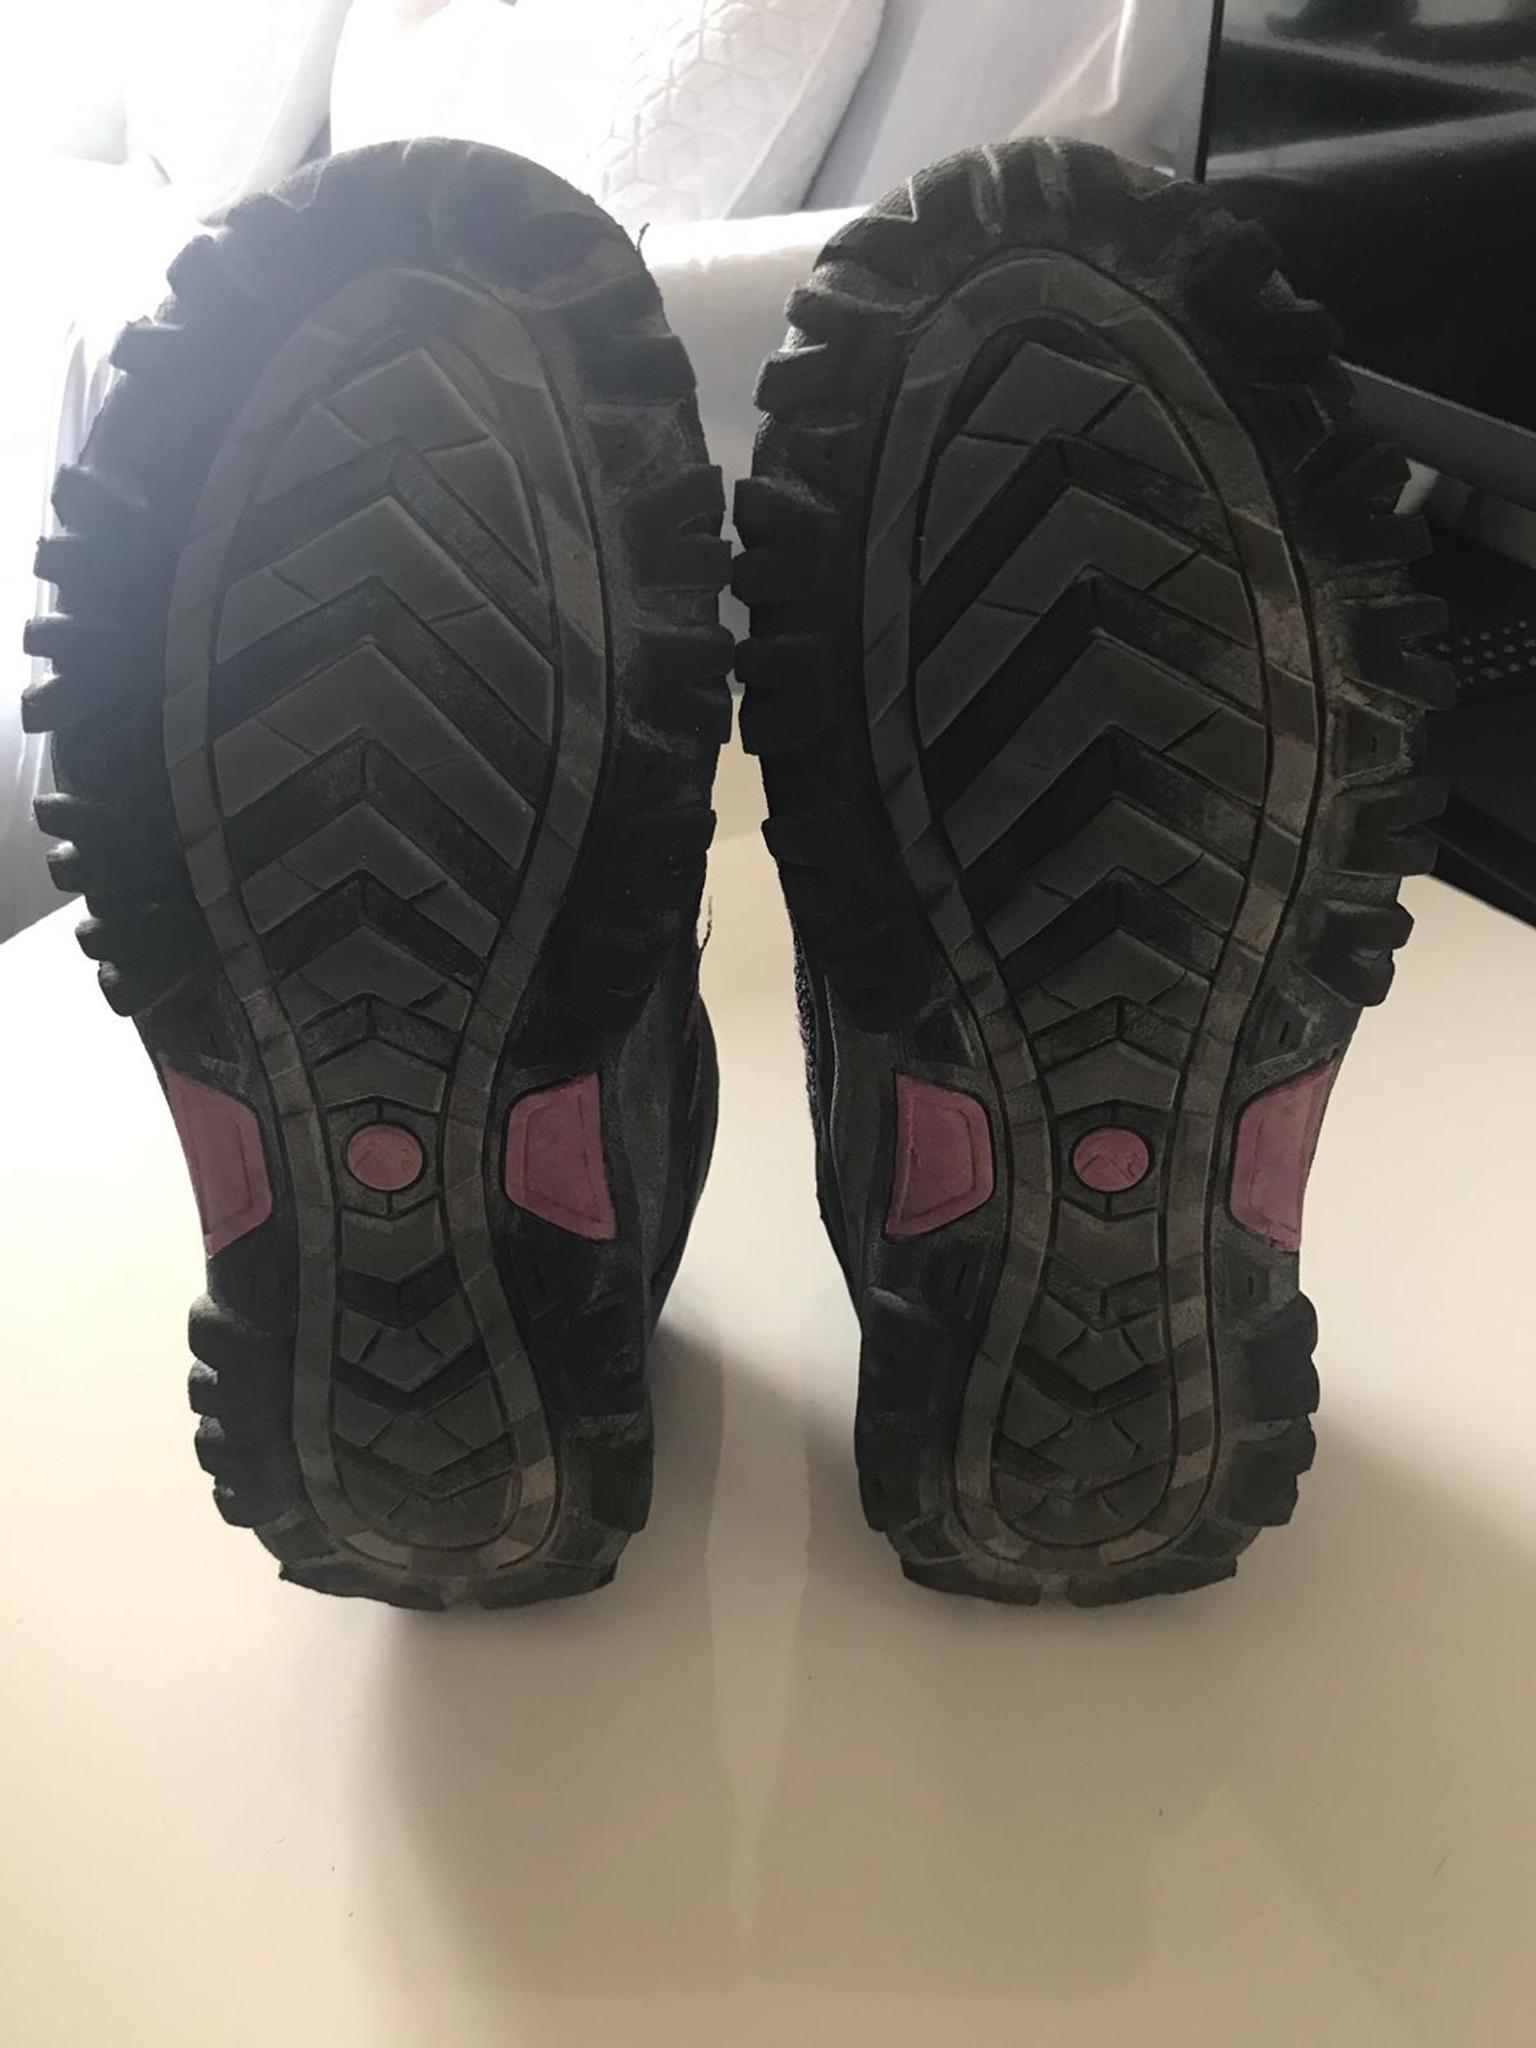 Gelert Womens Horizon Mid Waterproof Walking Boots Lace Up